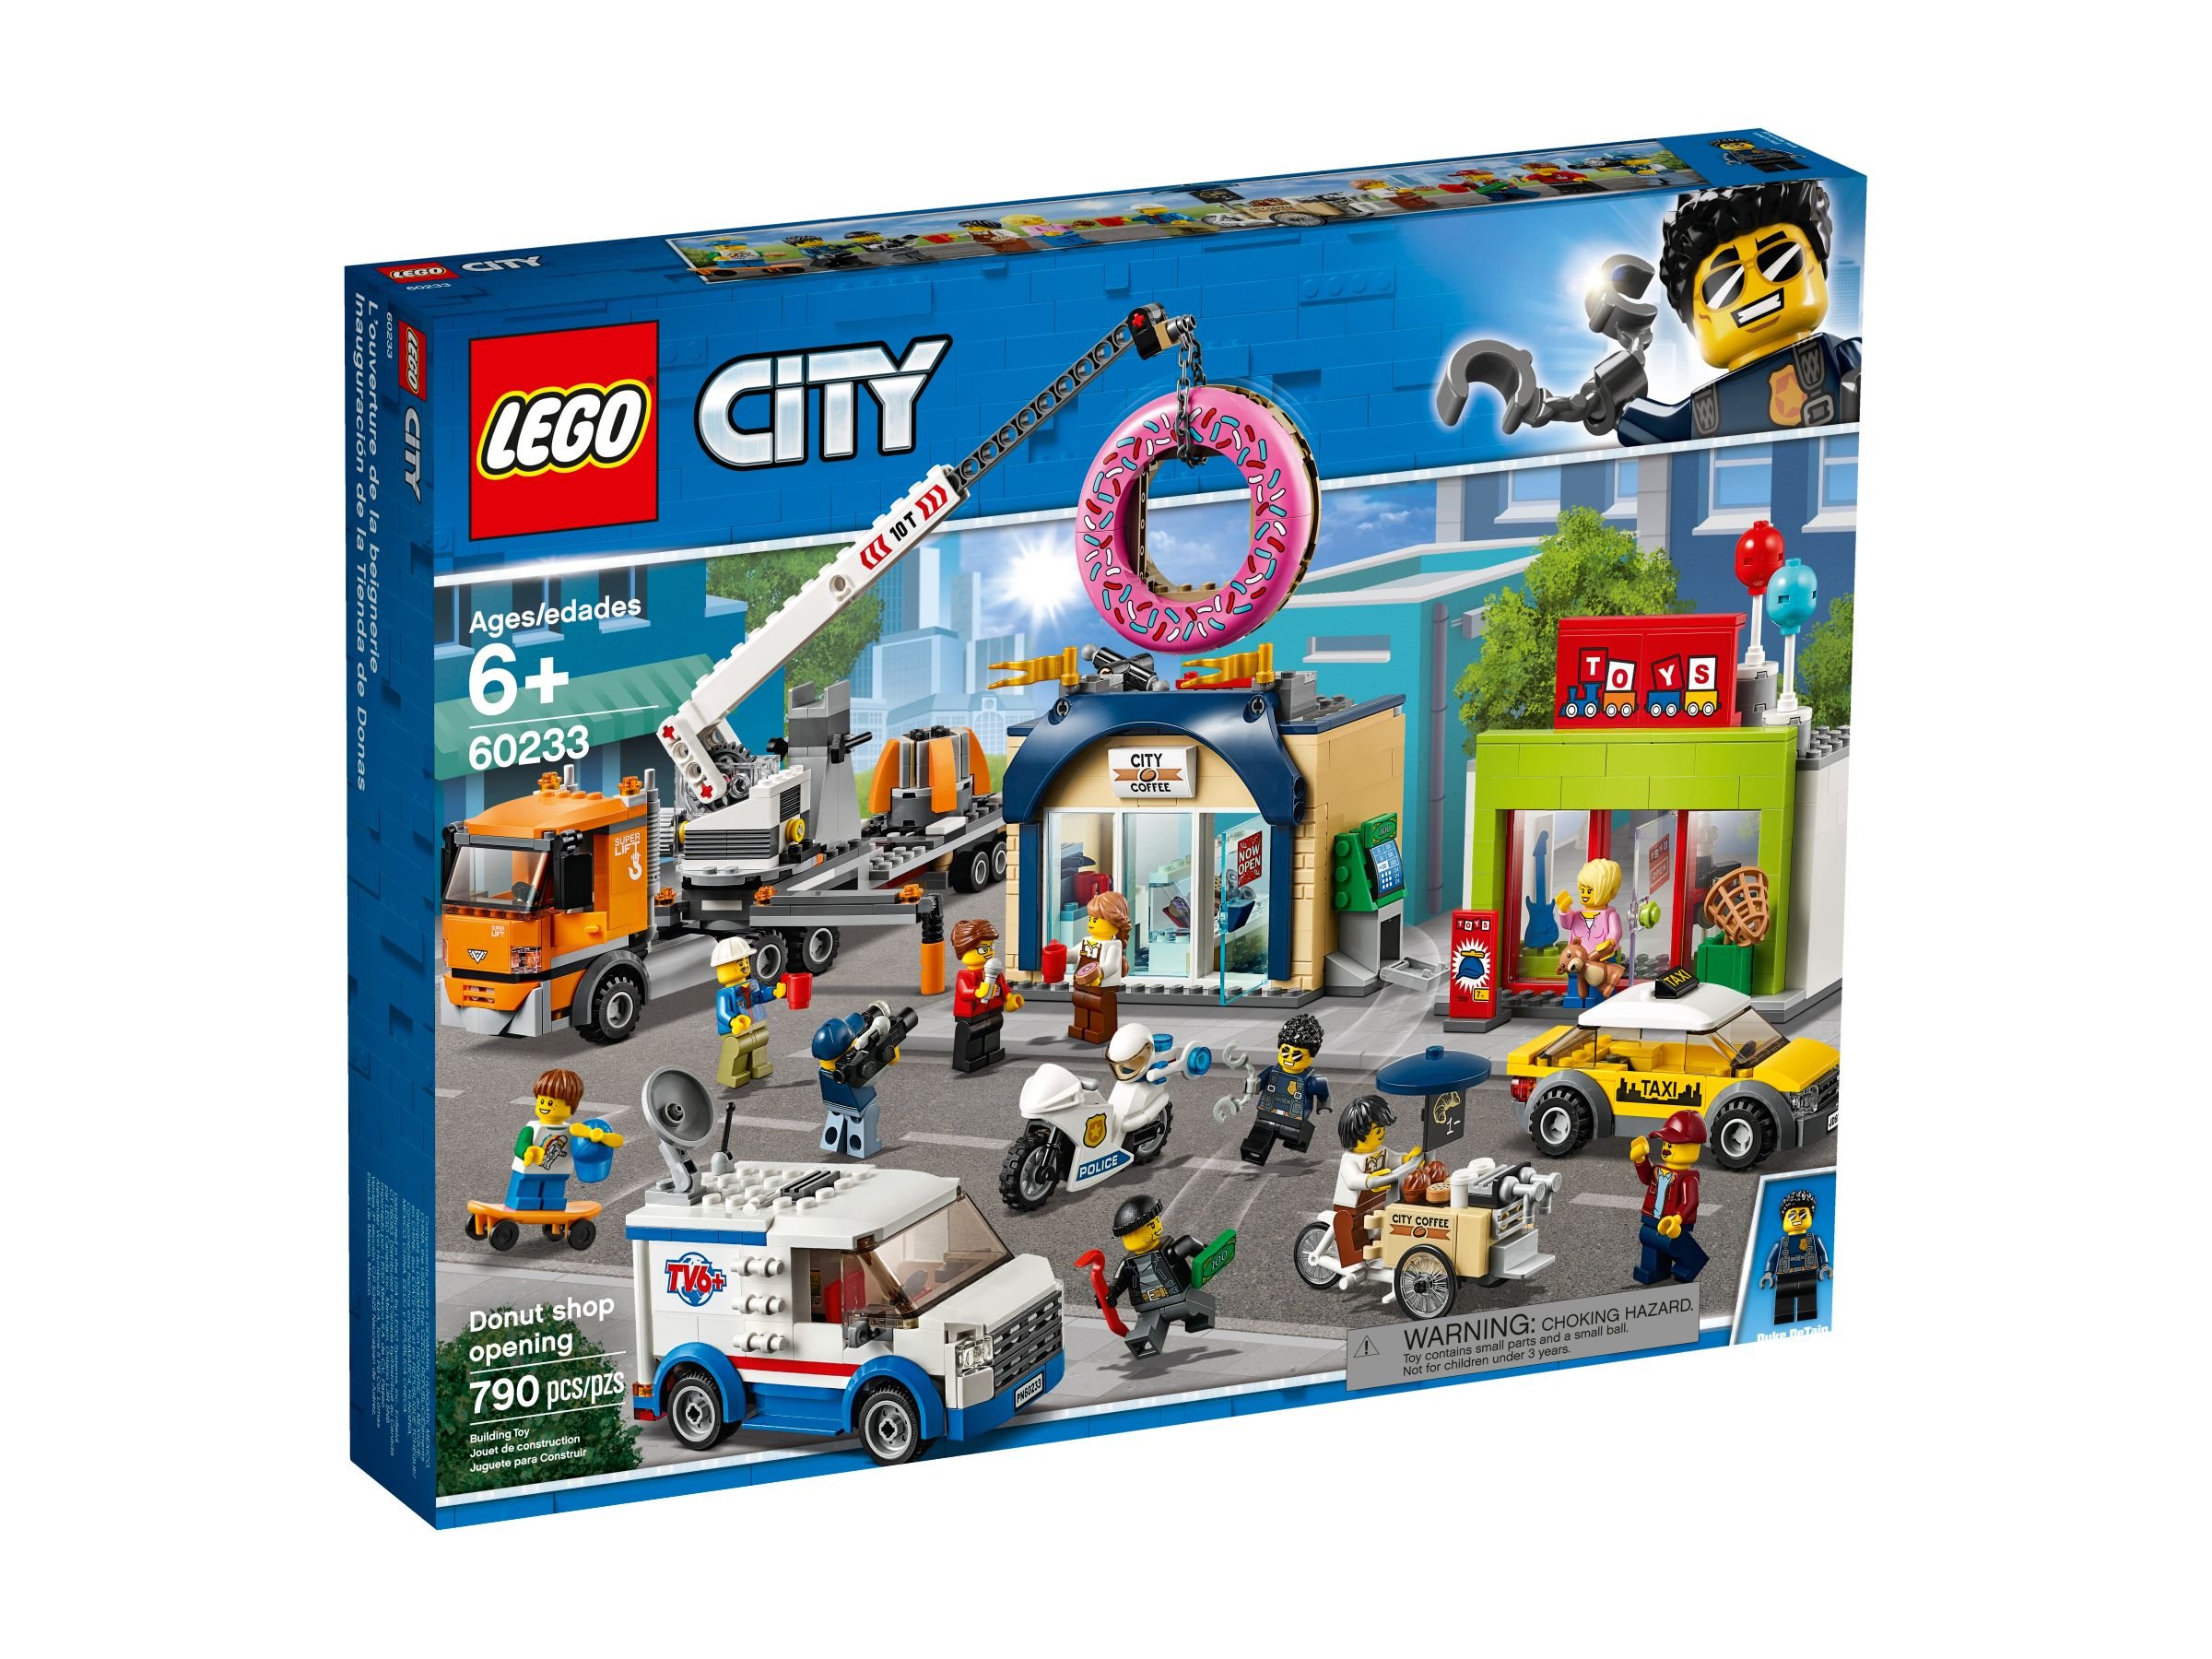 LEGO City 60233 Große Donut-Shop-Eröffnung LEGO_60233_alt1.jpg